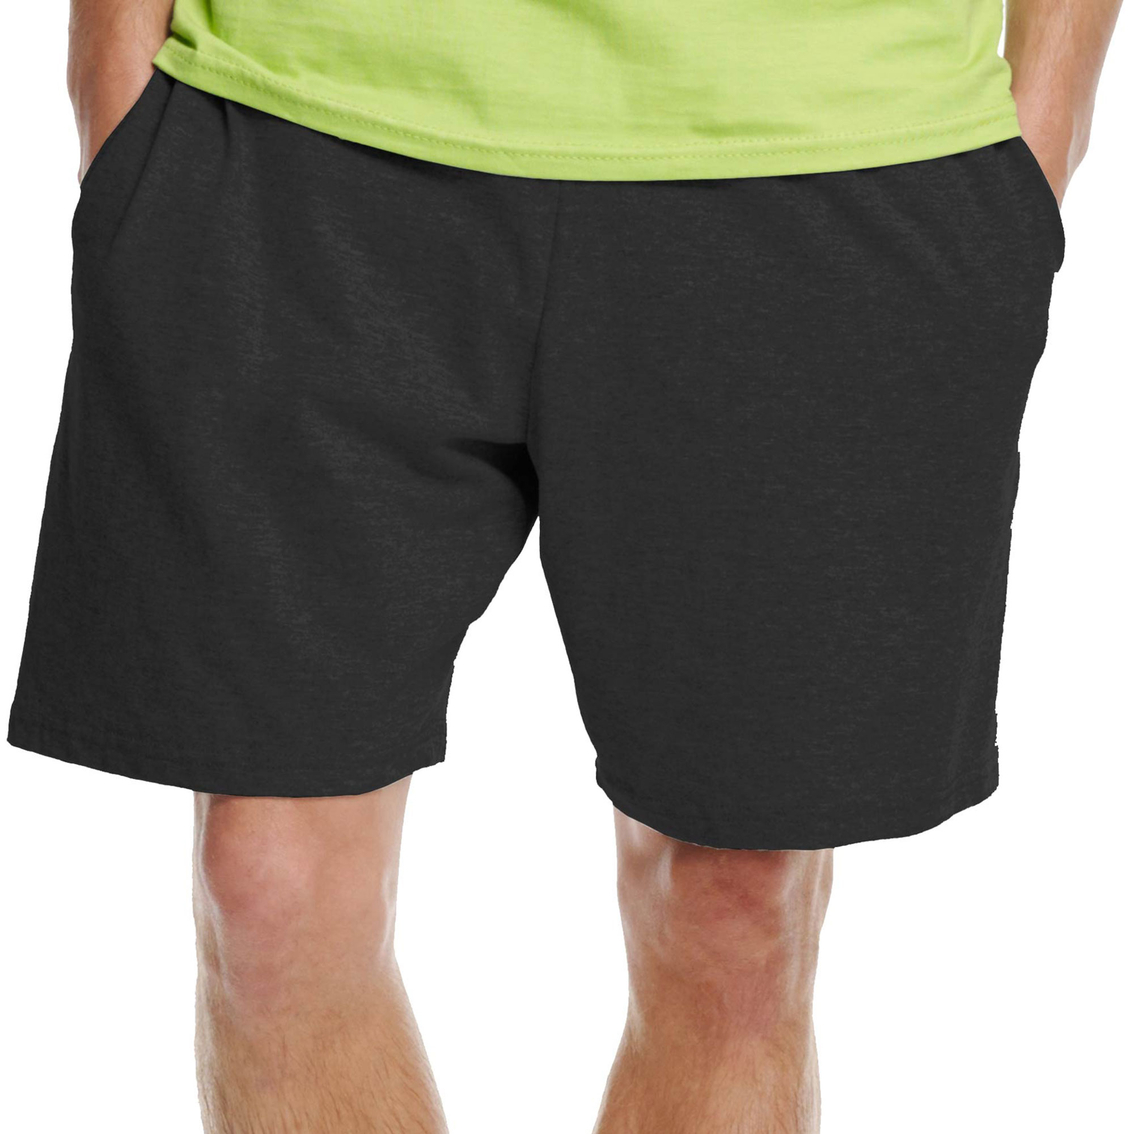 soft jersey shorts